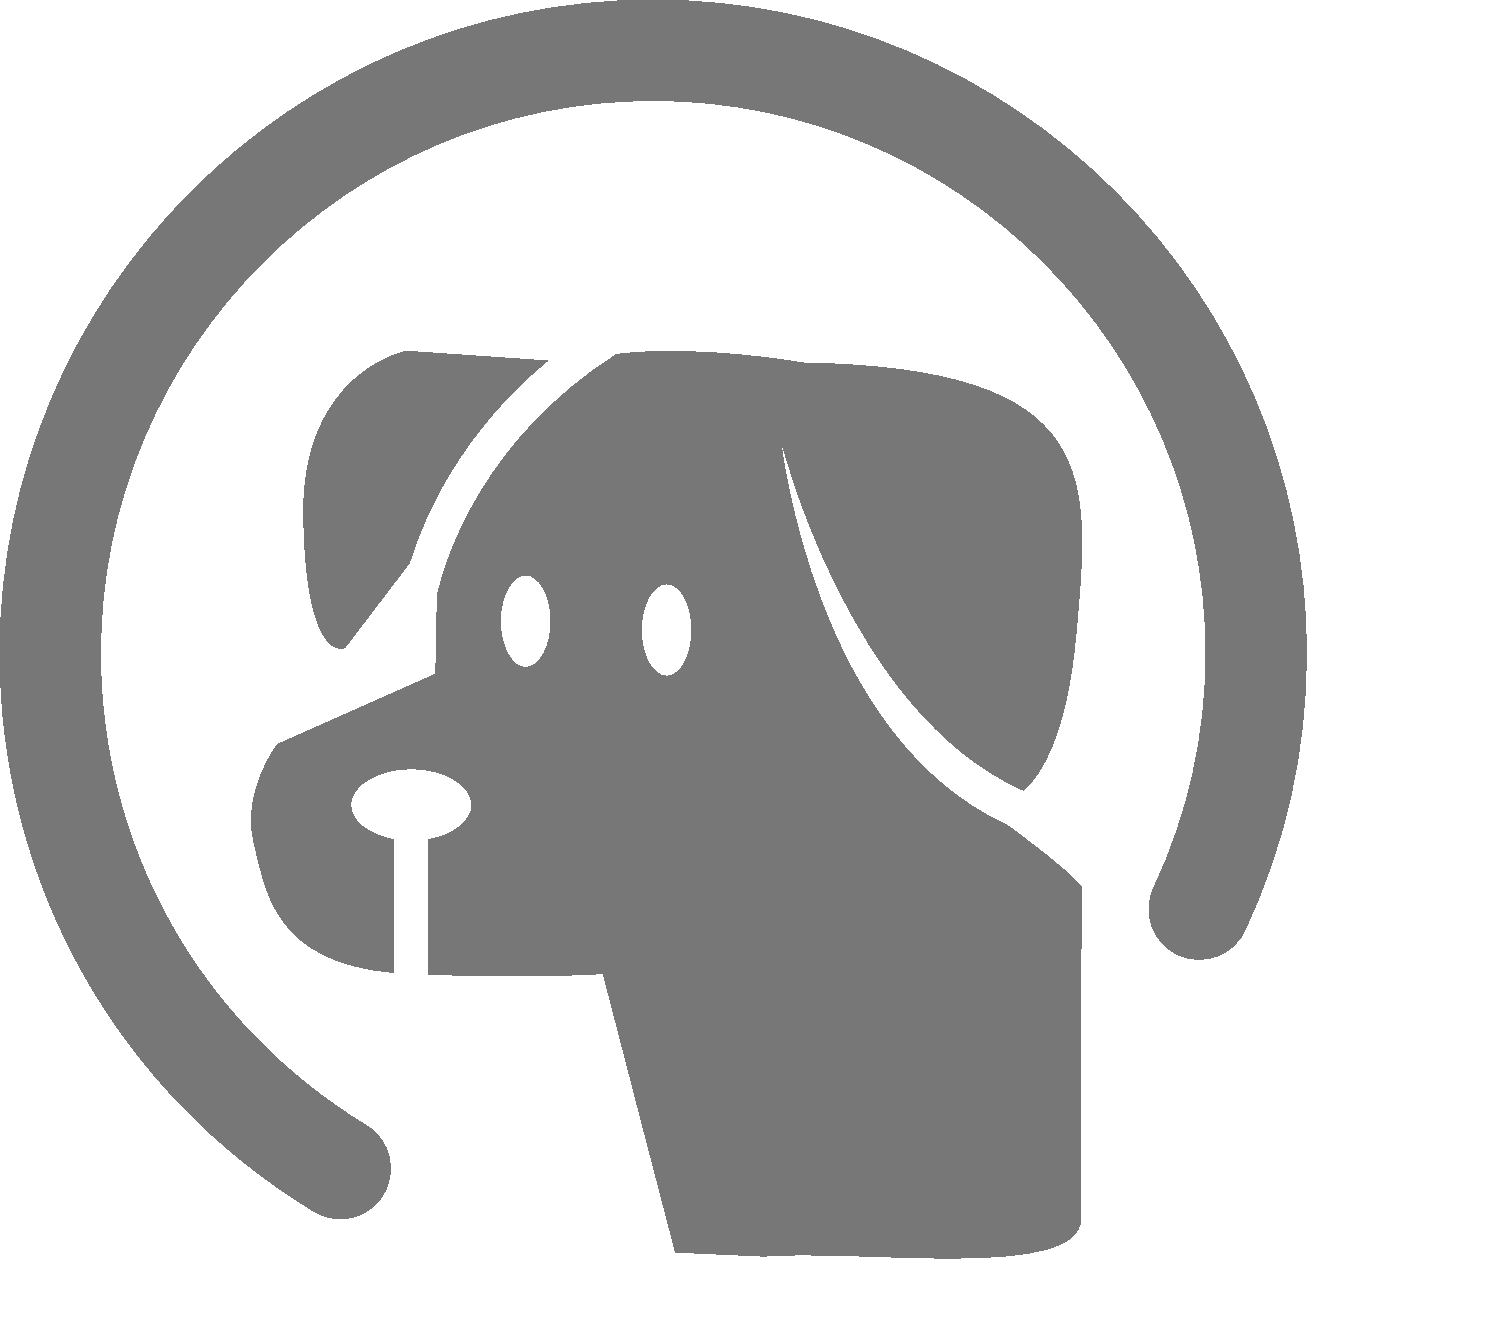 White Dog Logo - The Dog Gateway